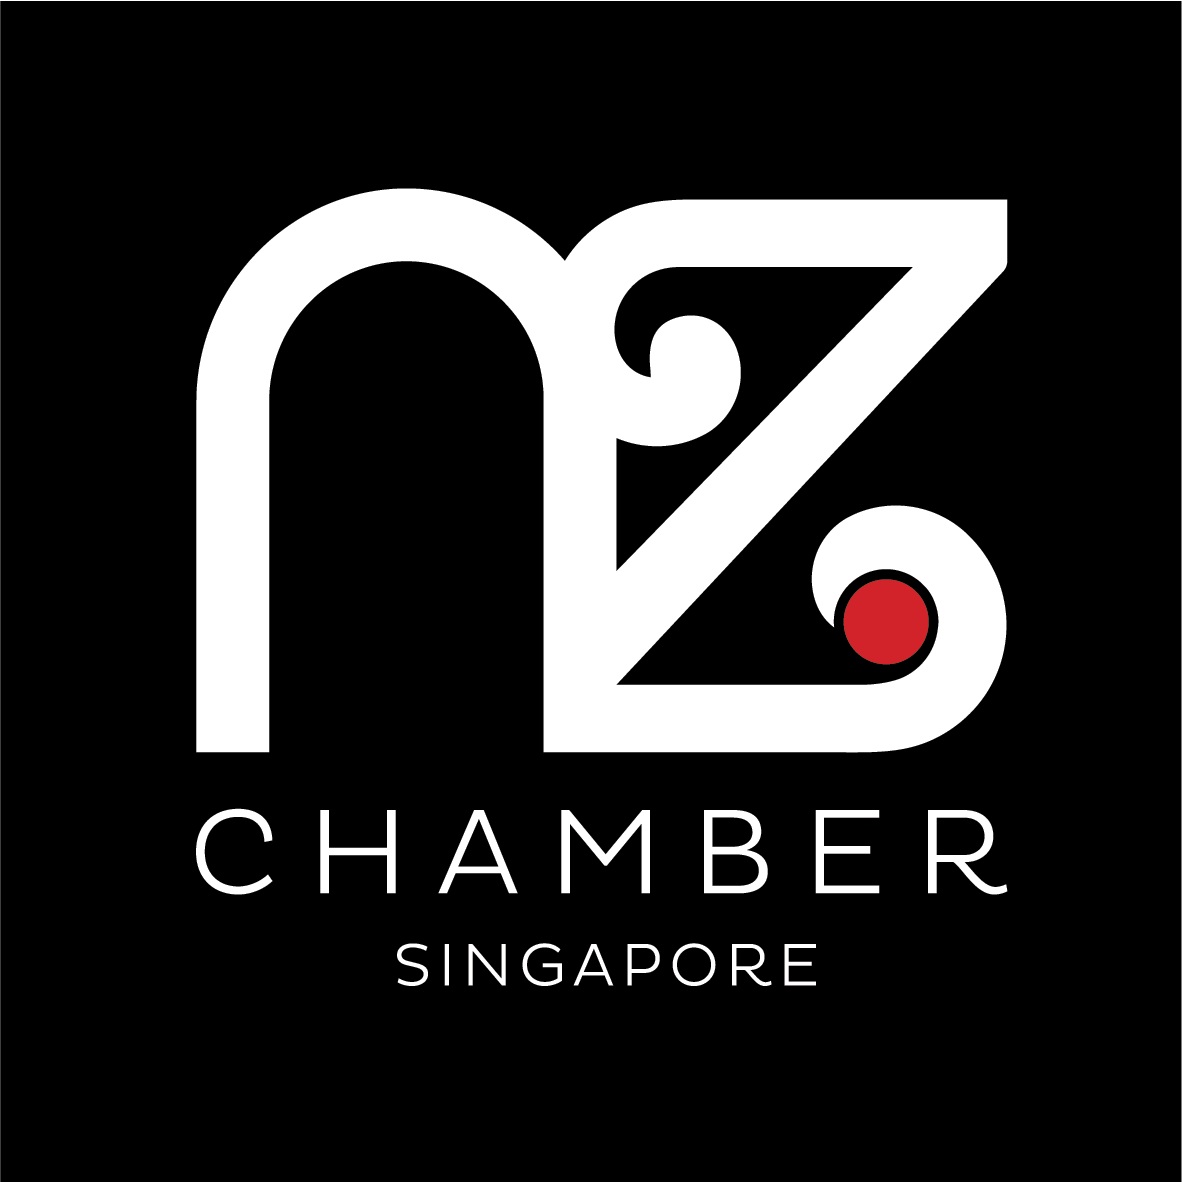 New Zealand Chamber of Commerce Singapore